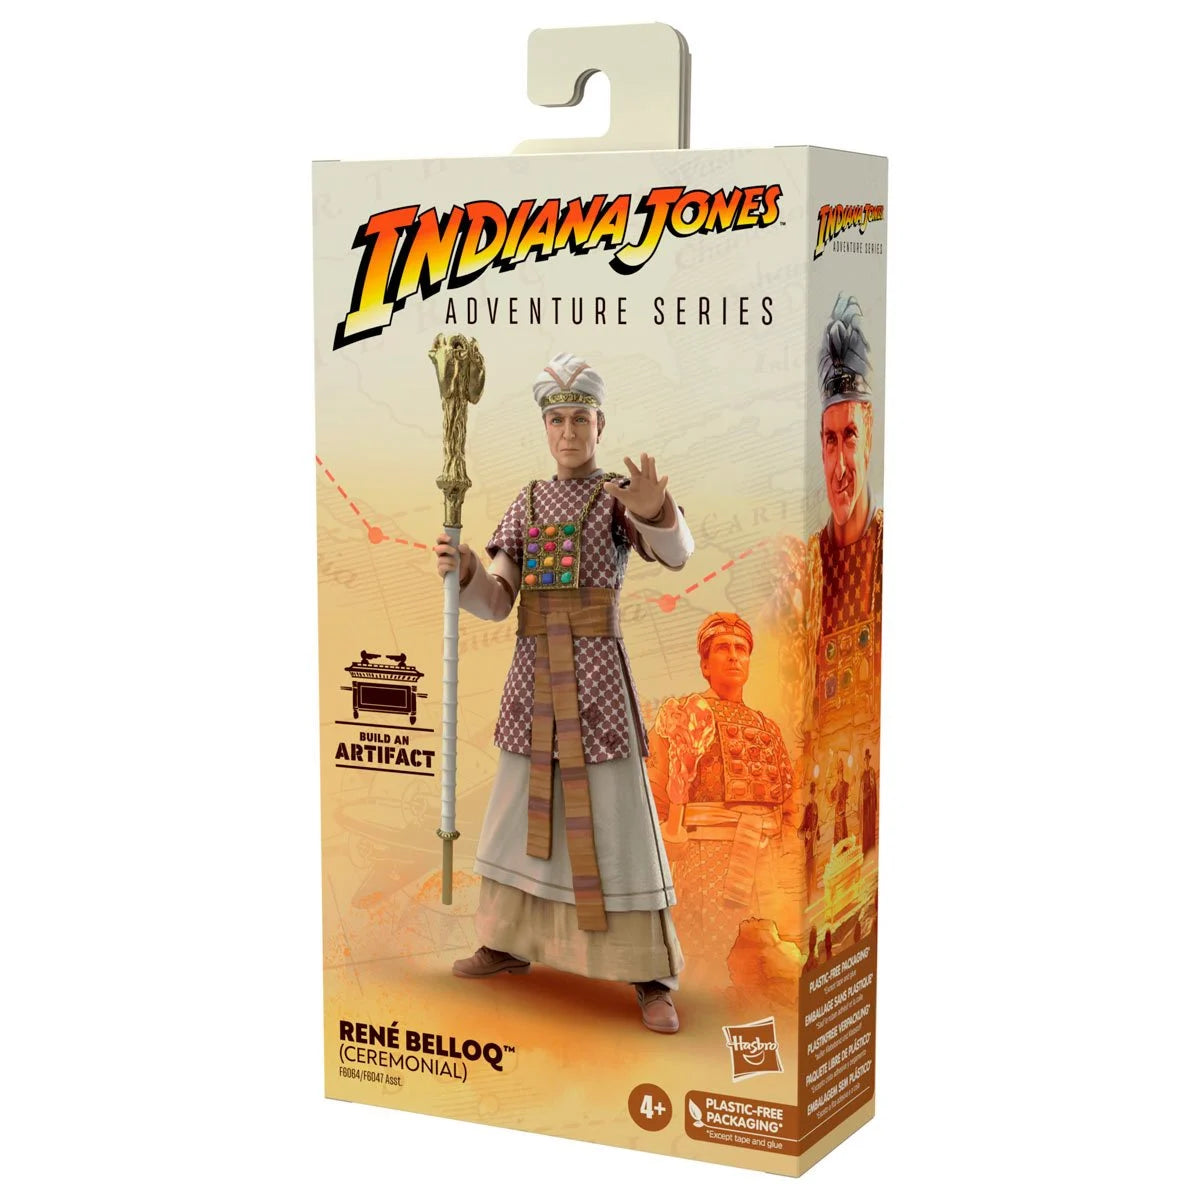 Indiana Jones Adventure Series René Belloq (Ceremonial) 6-Inch Action Figure Toy